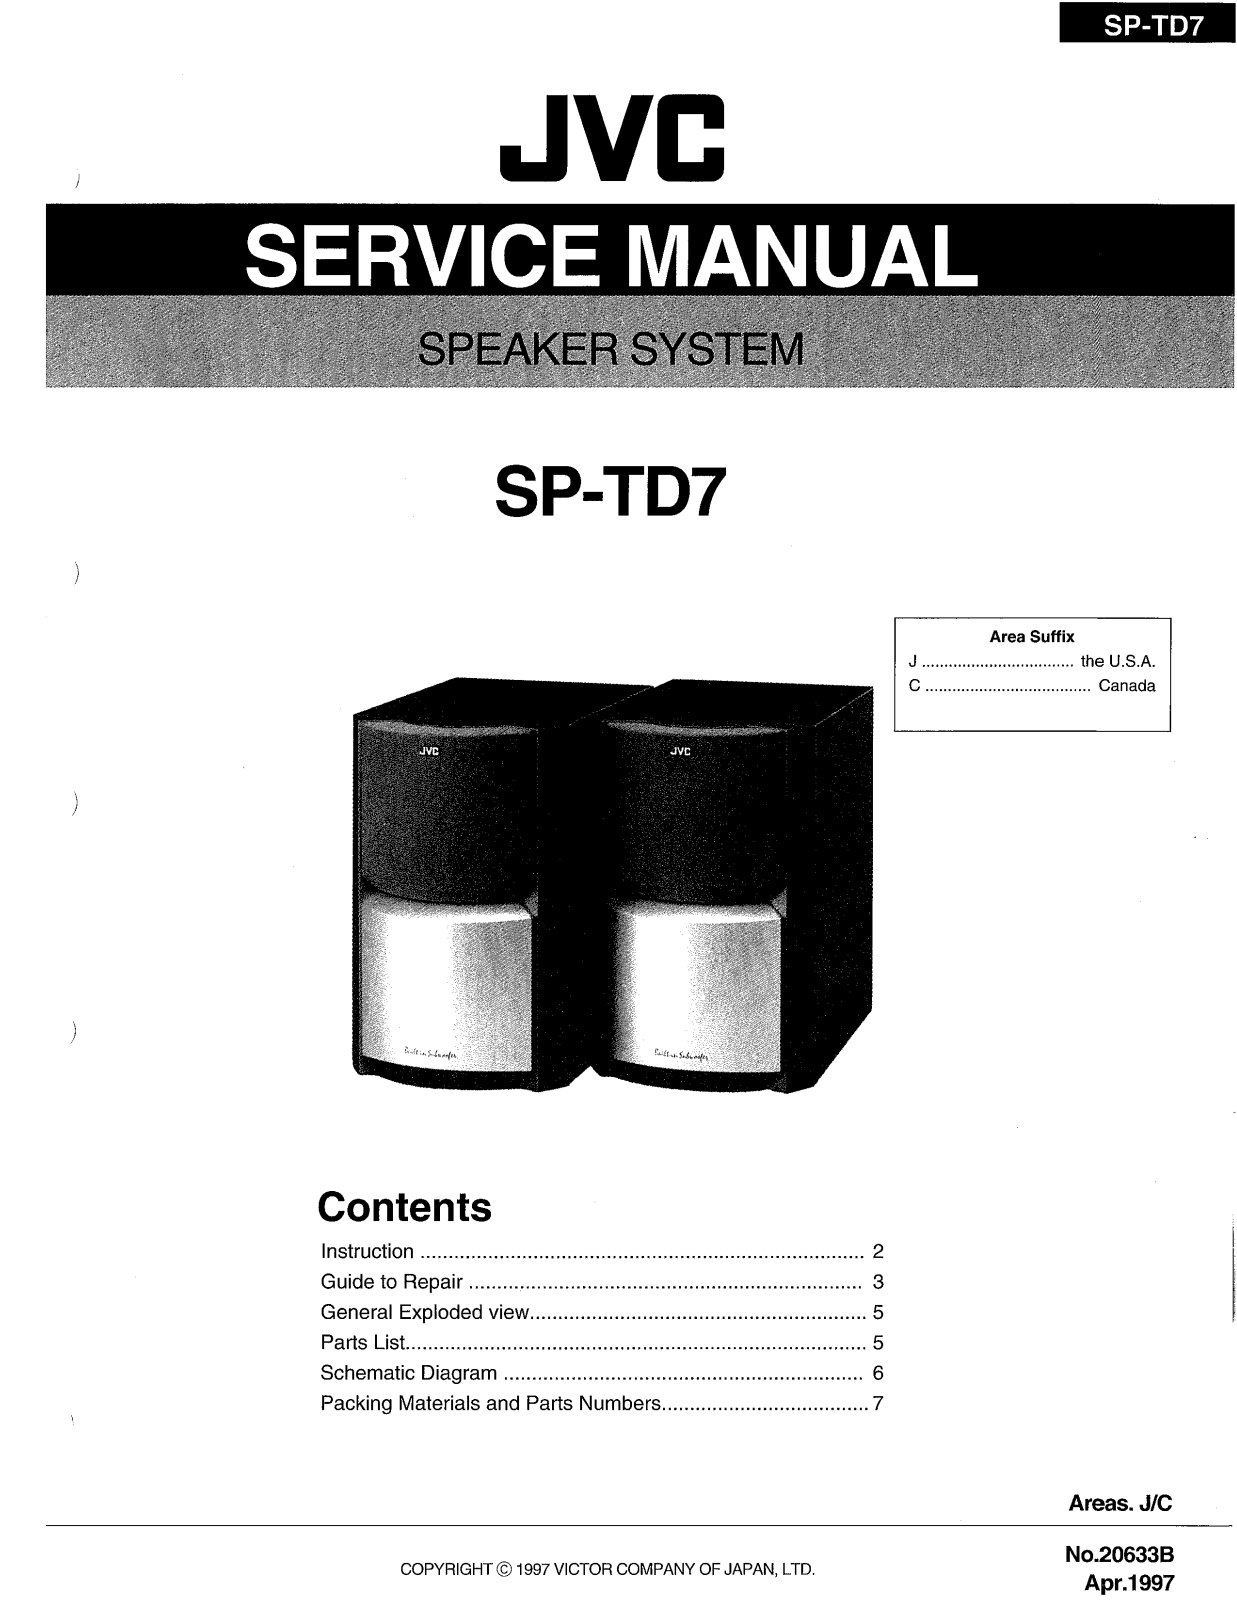 JVC SP-TD7 Service Manual